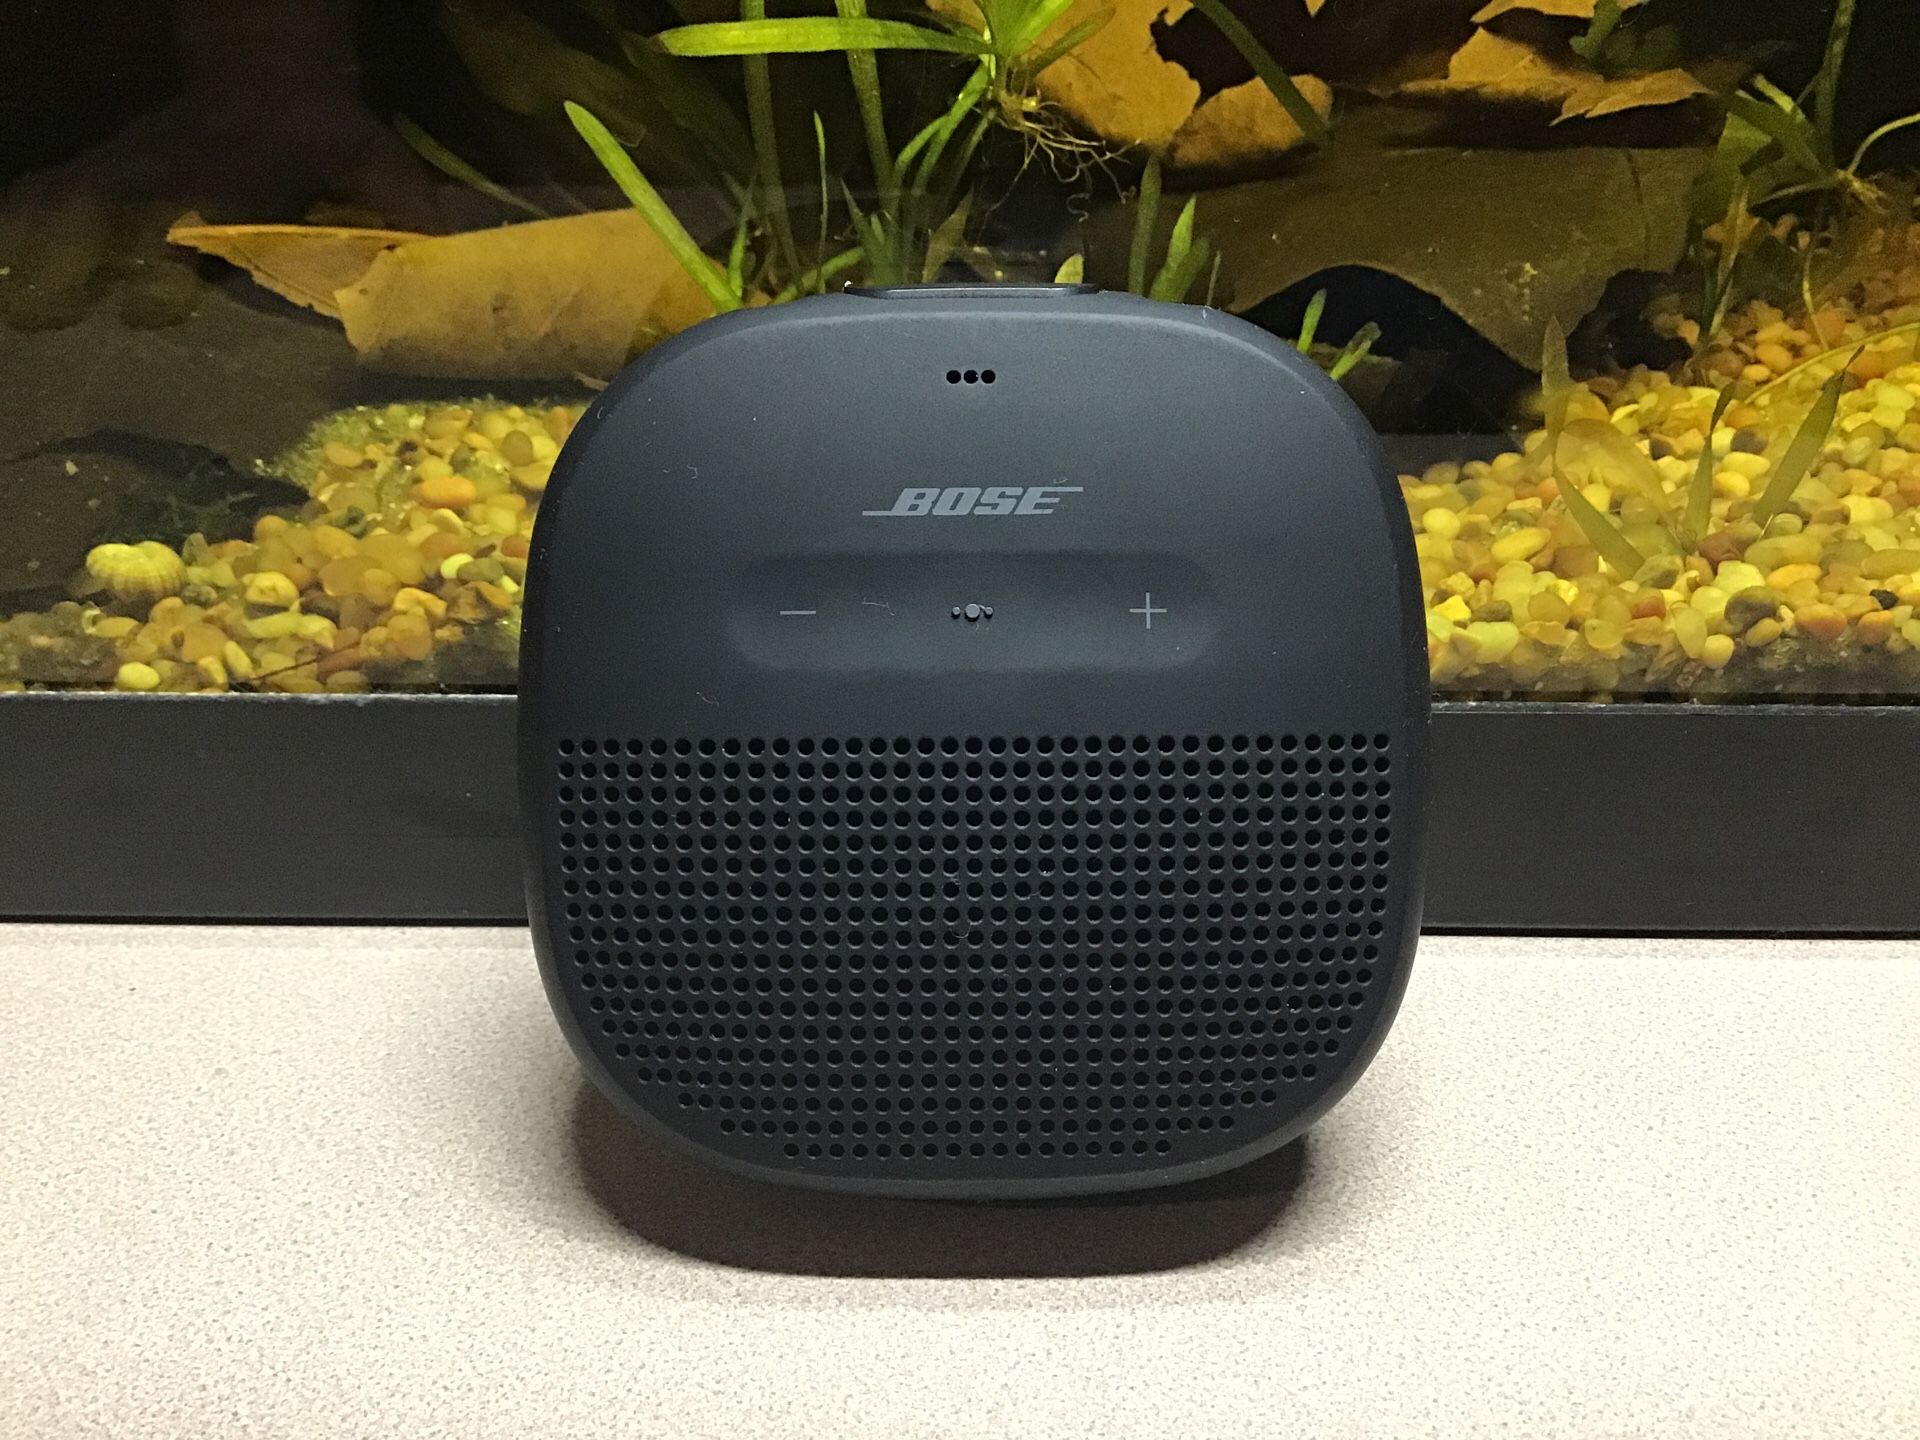 Bose personal speaker.